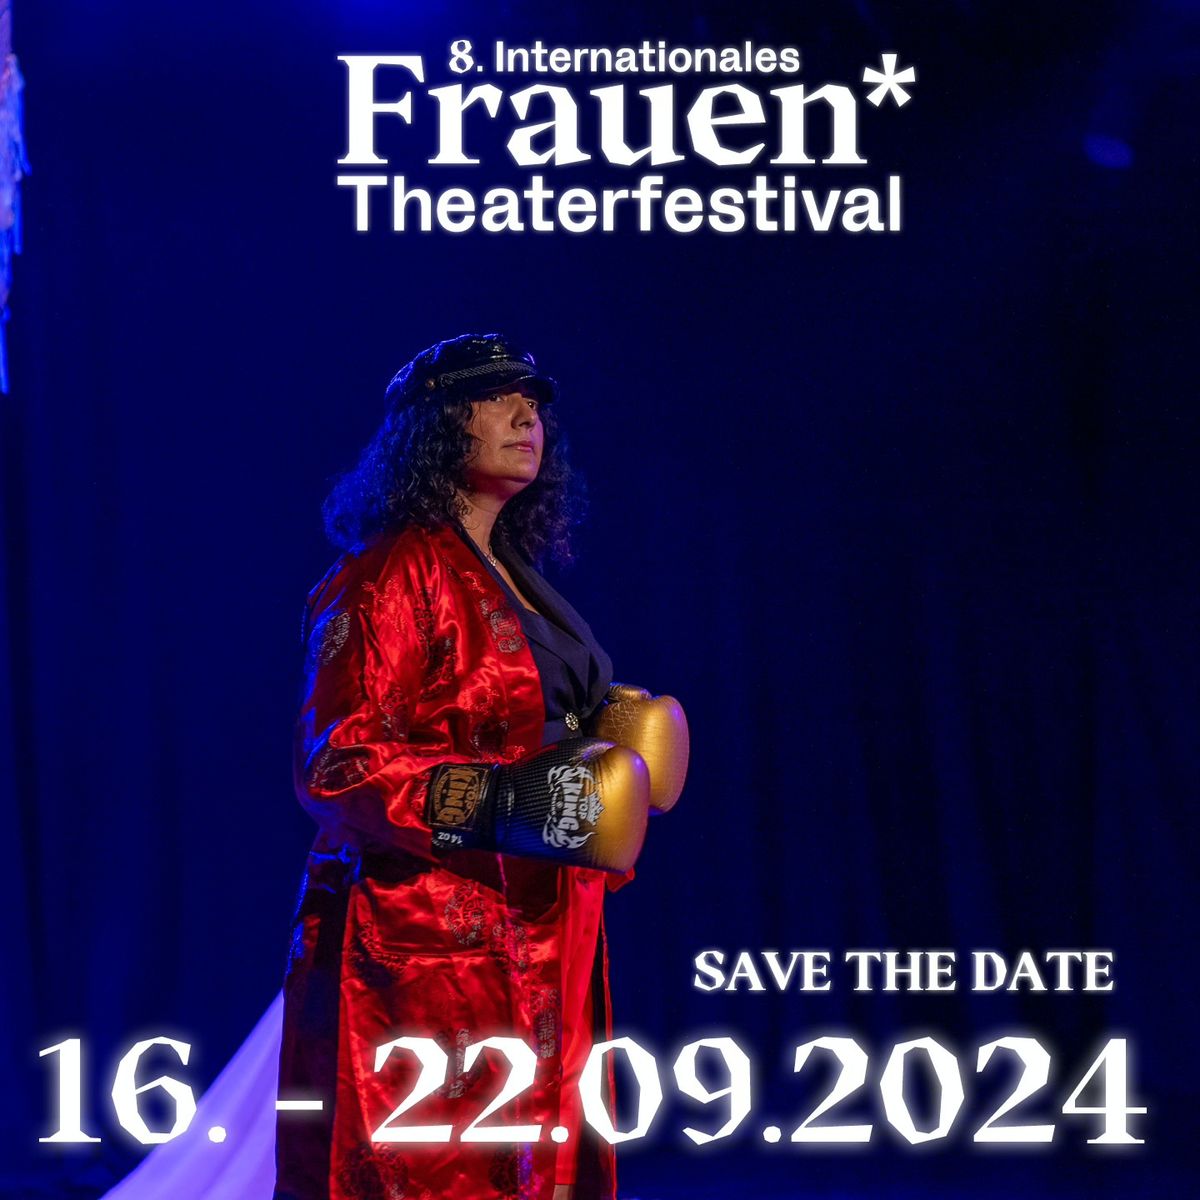 8. internationales Frauen*Theaterfestival